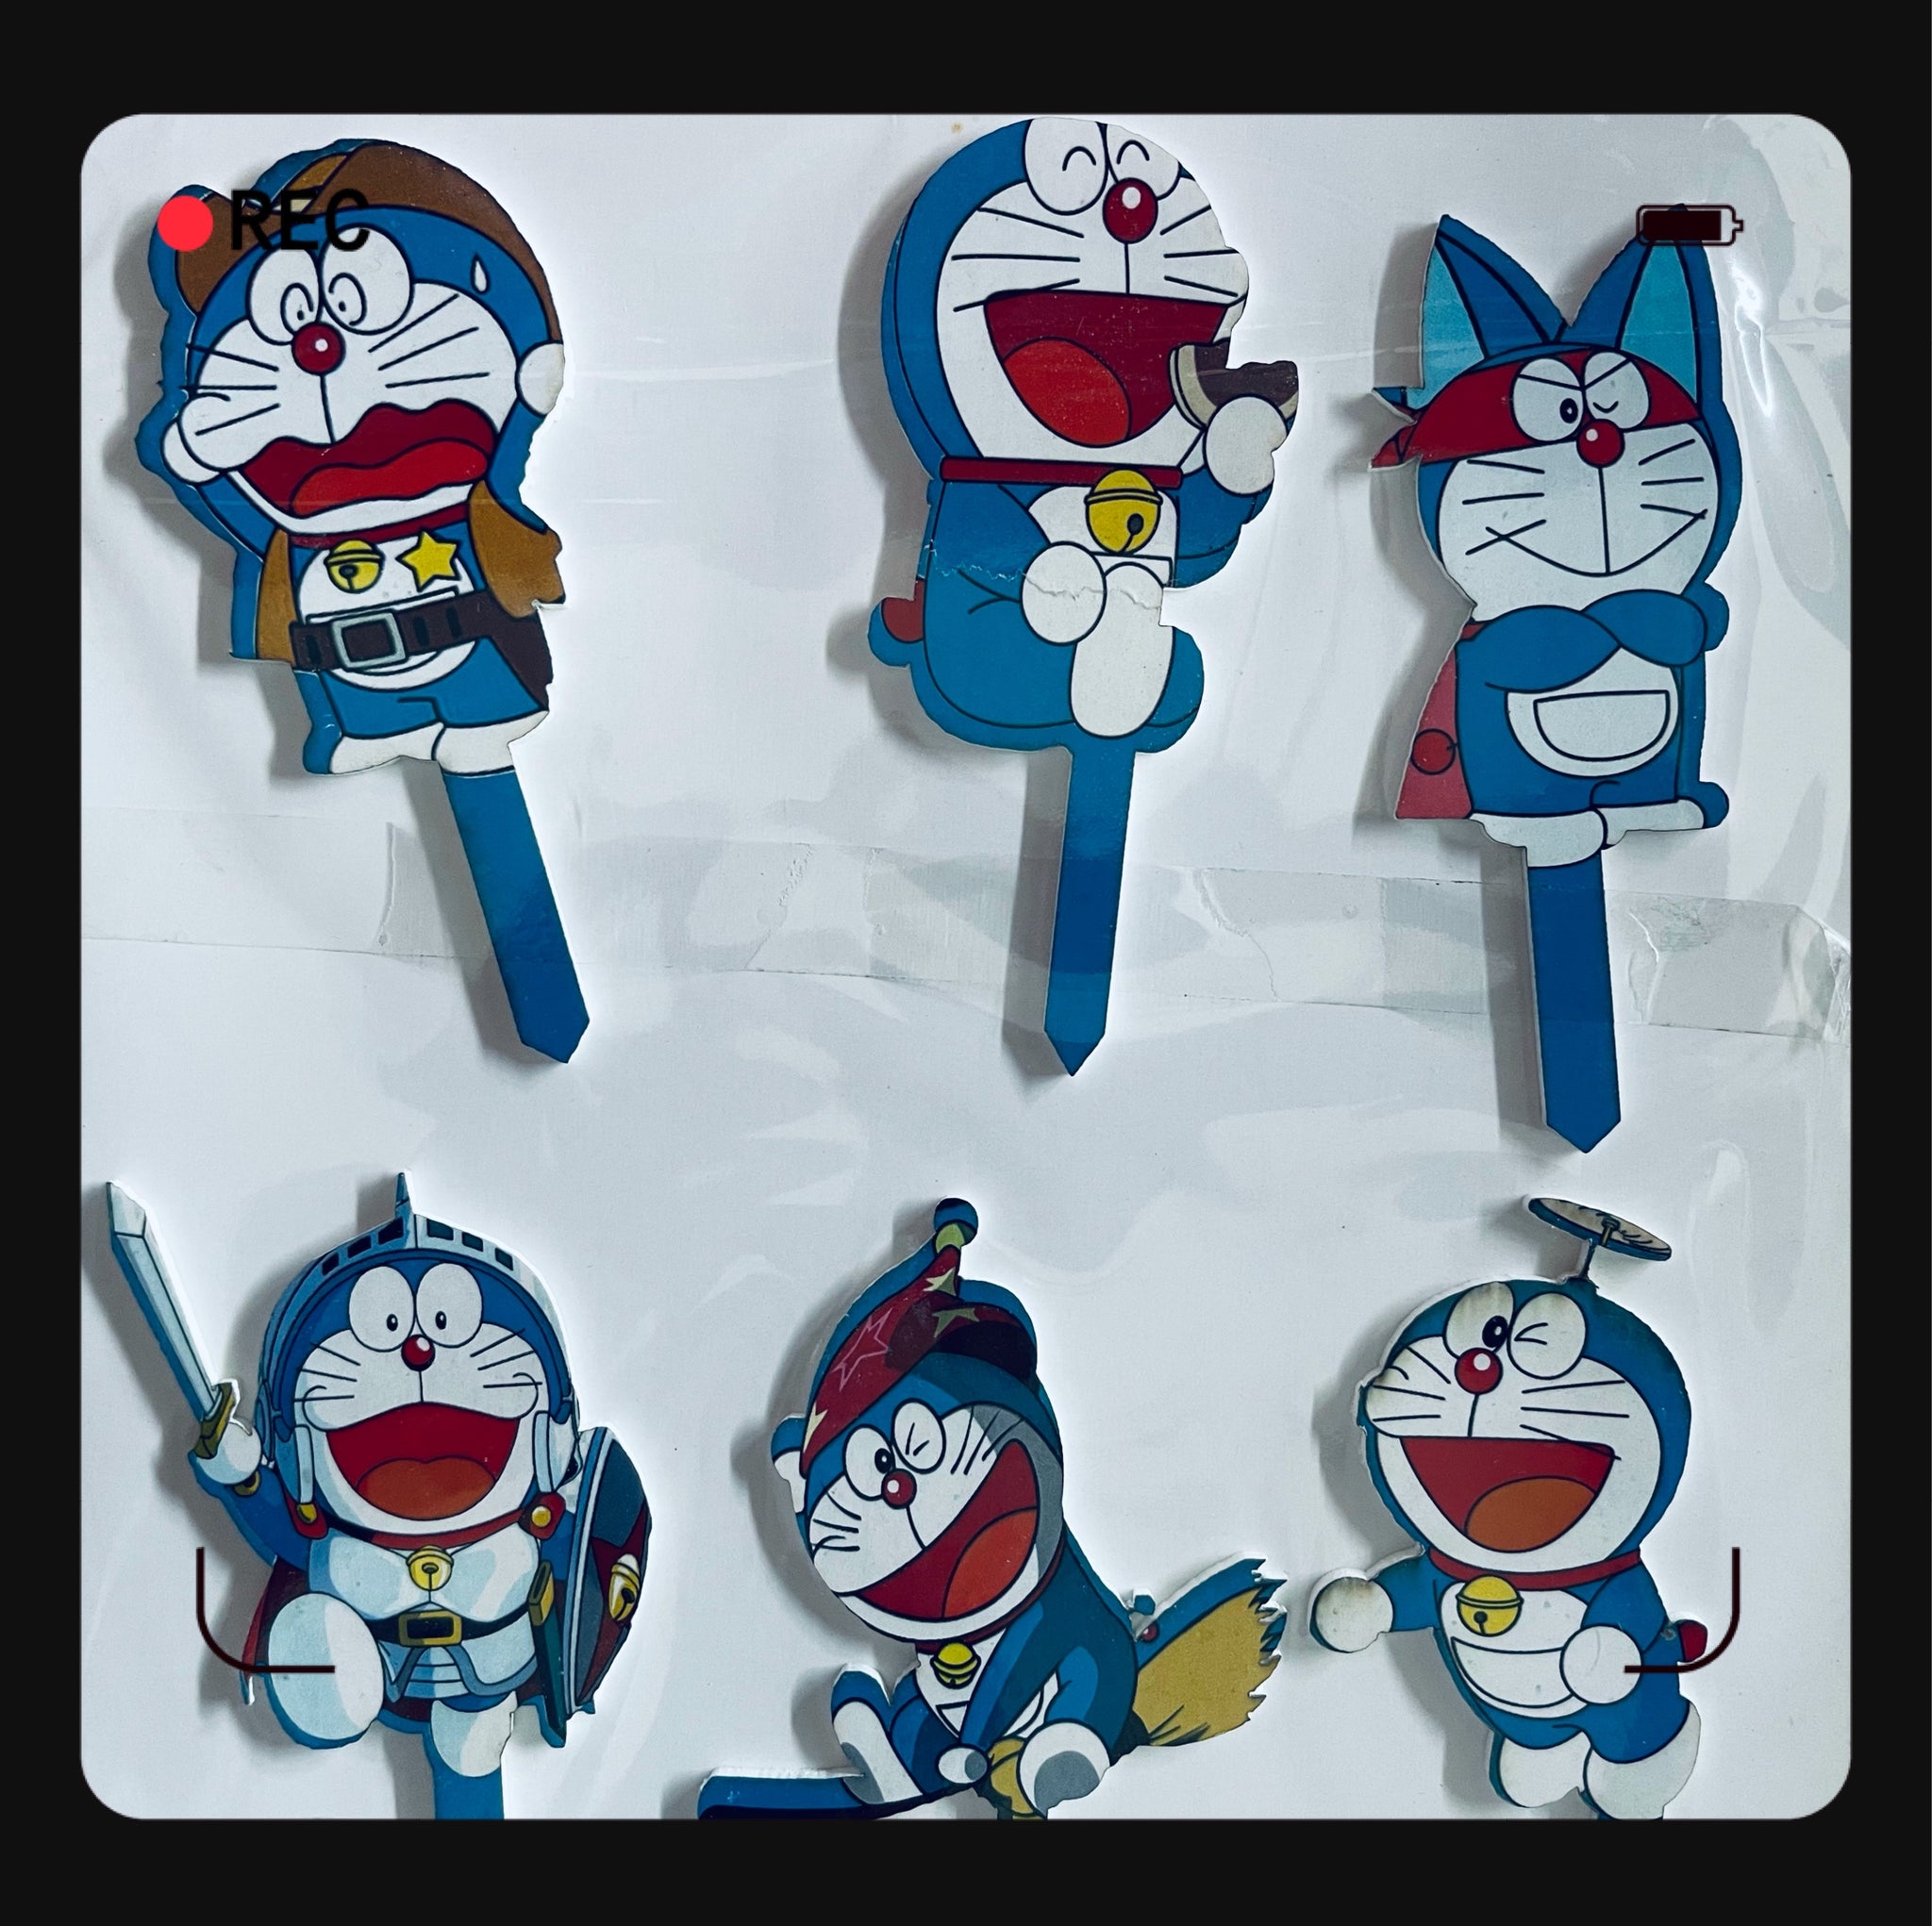 Doraemon Cake Topper Decor Anime Kids Toy Action Figure 6 PCS | eBay